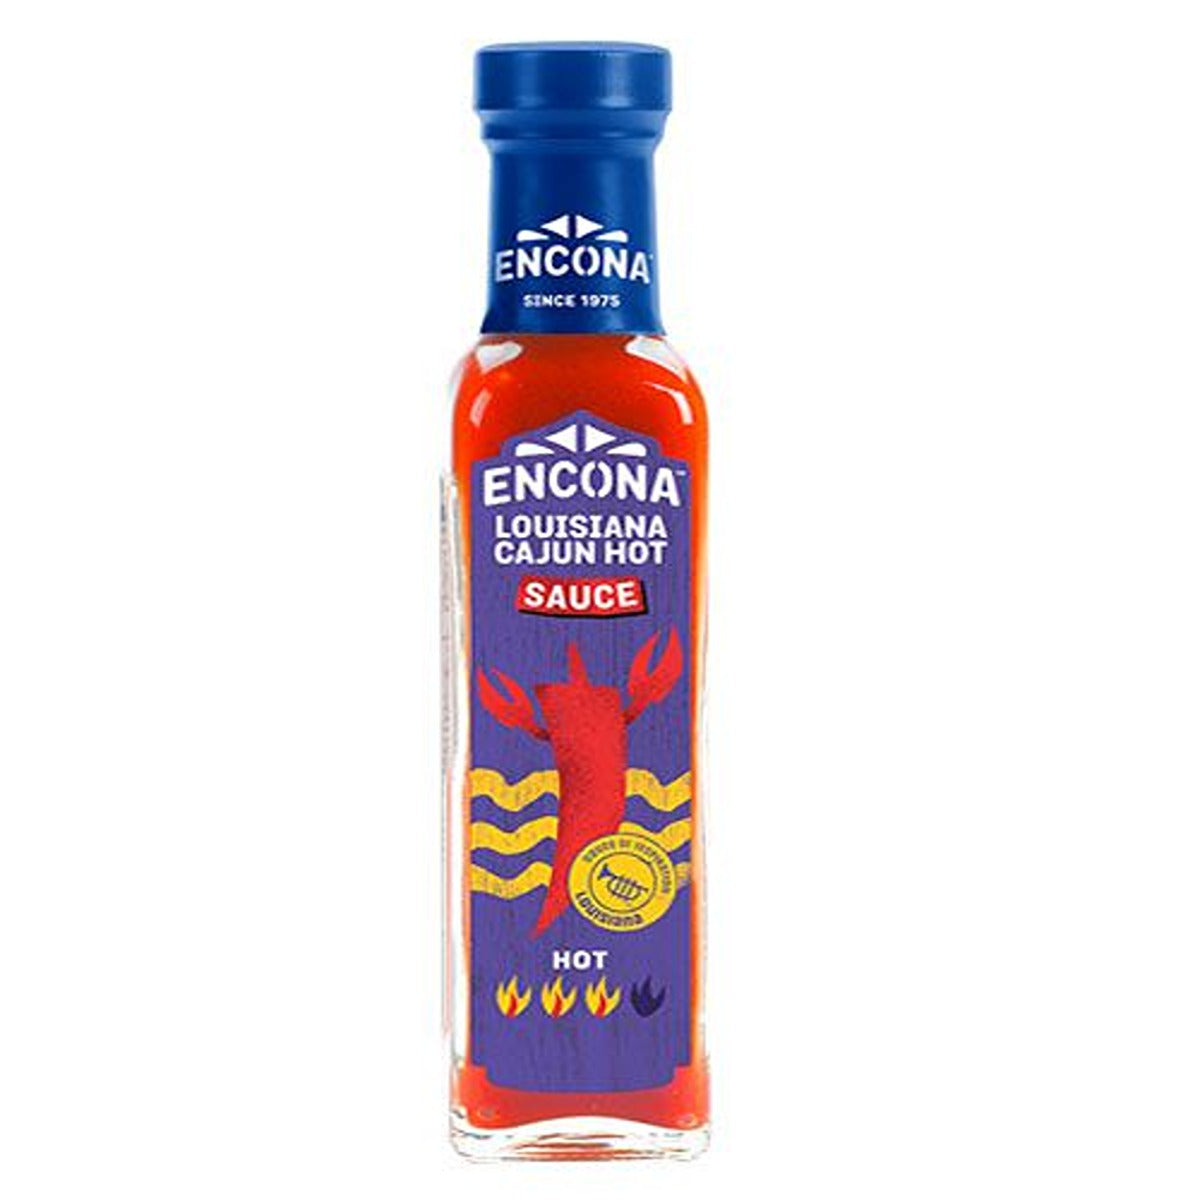 A bottle of Encona Louisiana Cajun Hot Sauce - 142ml on a white background.